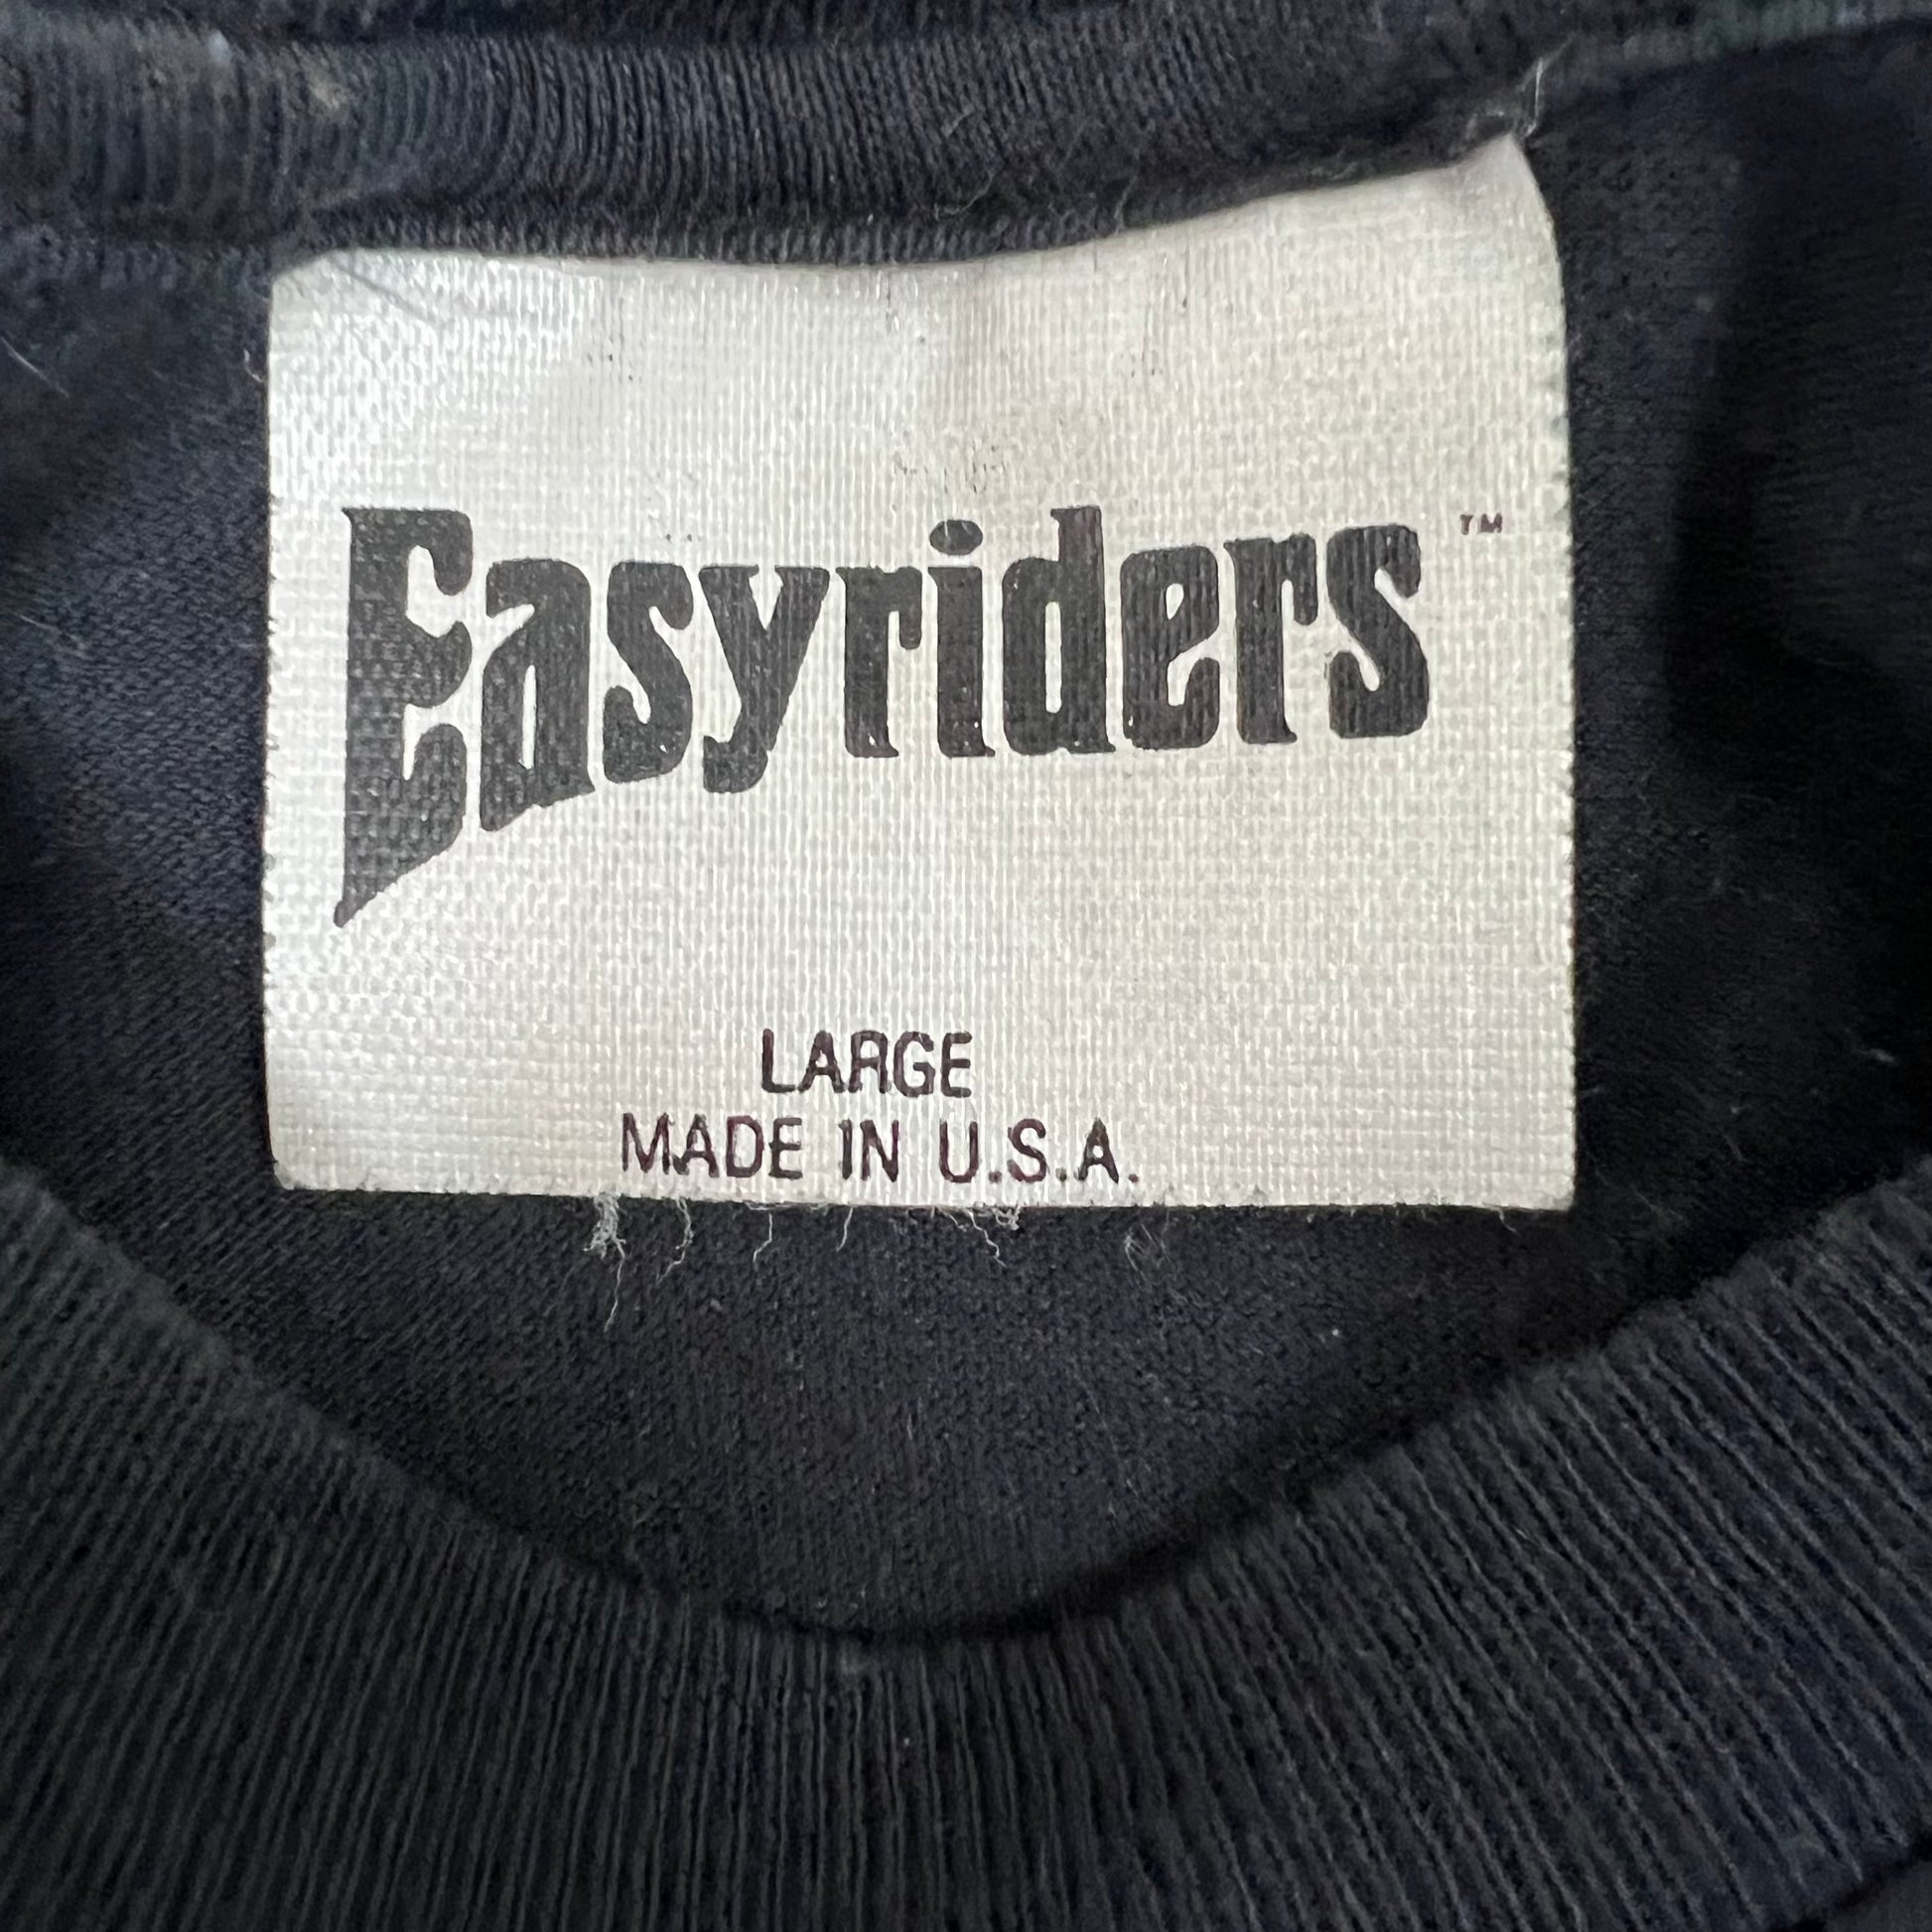 (L) Easyriders Motorcycle Magazine T-shirt